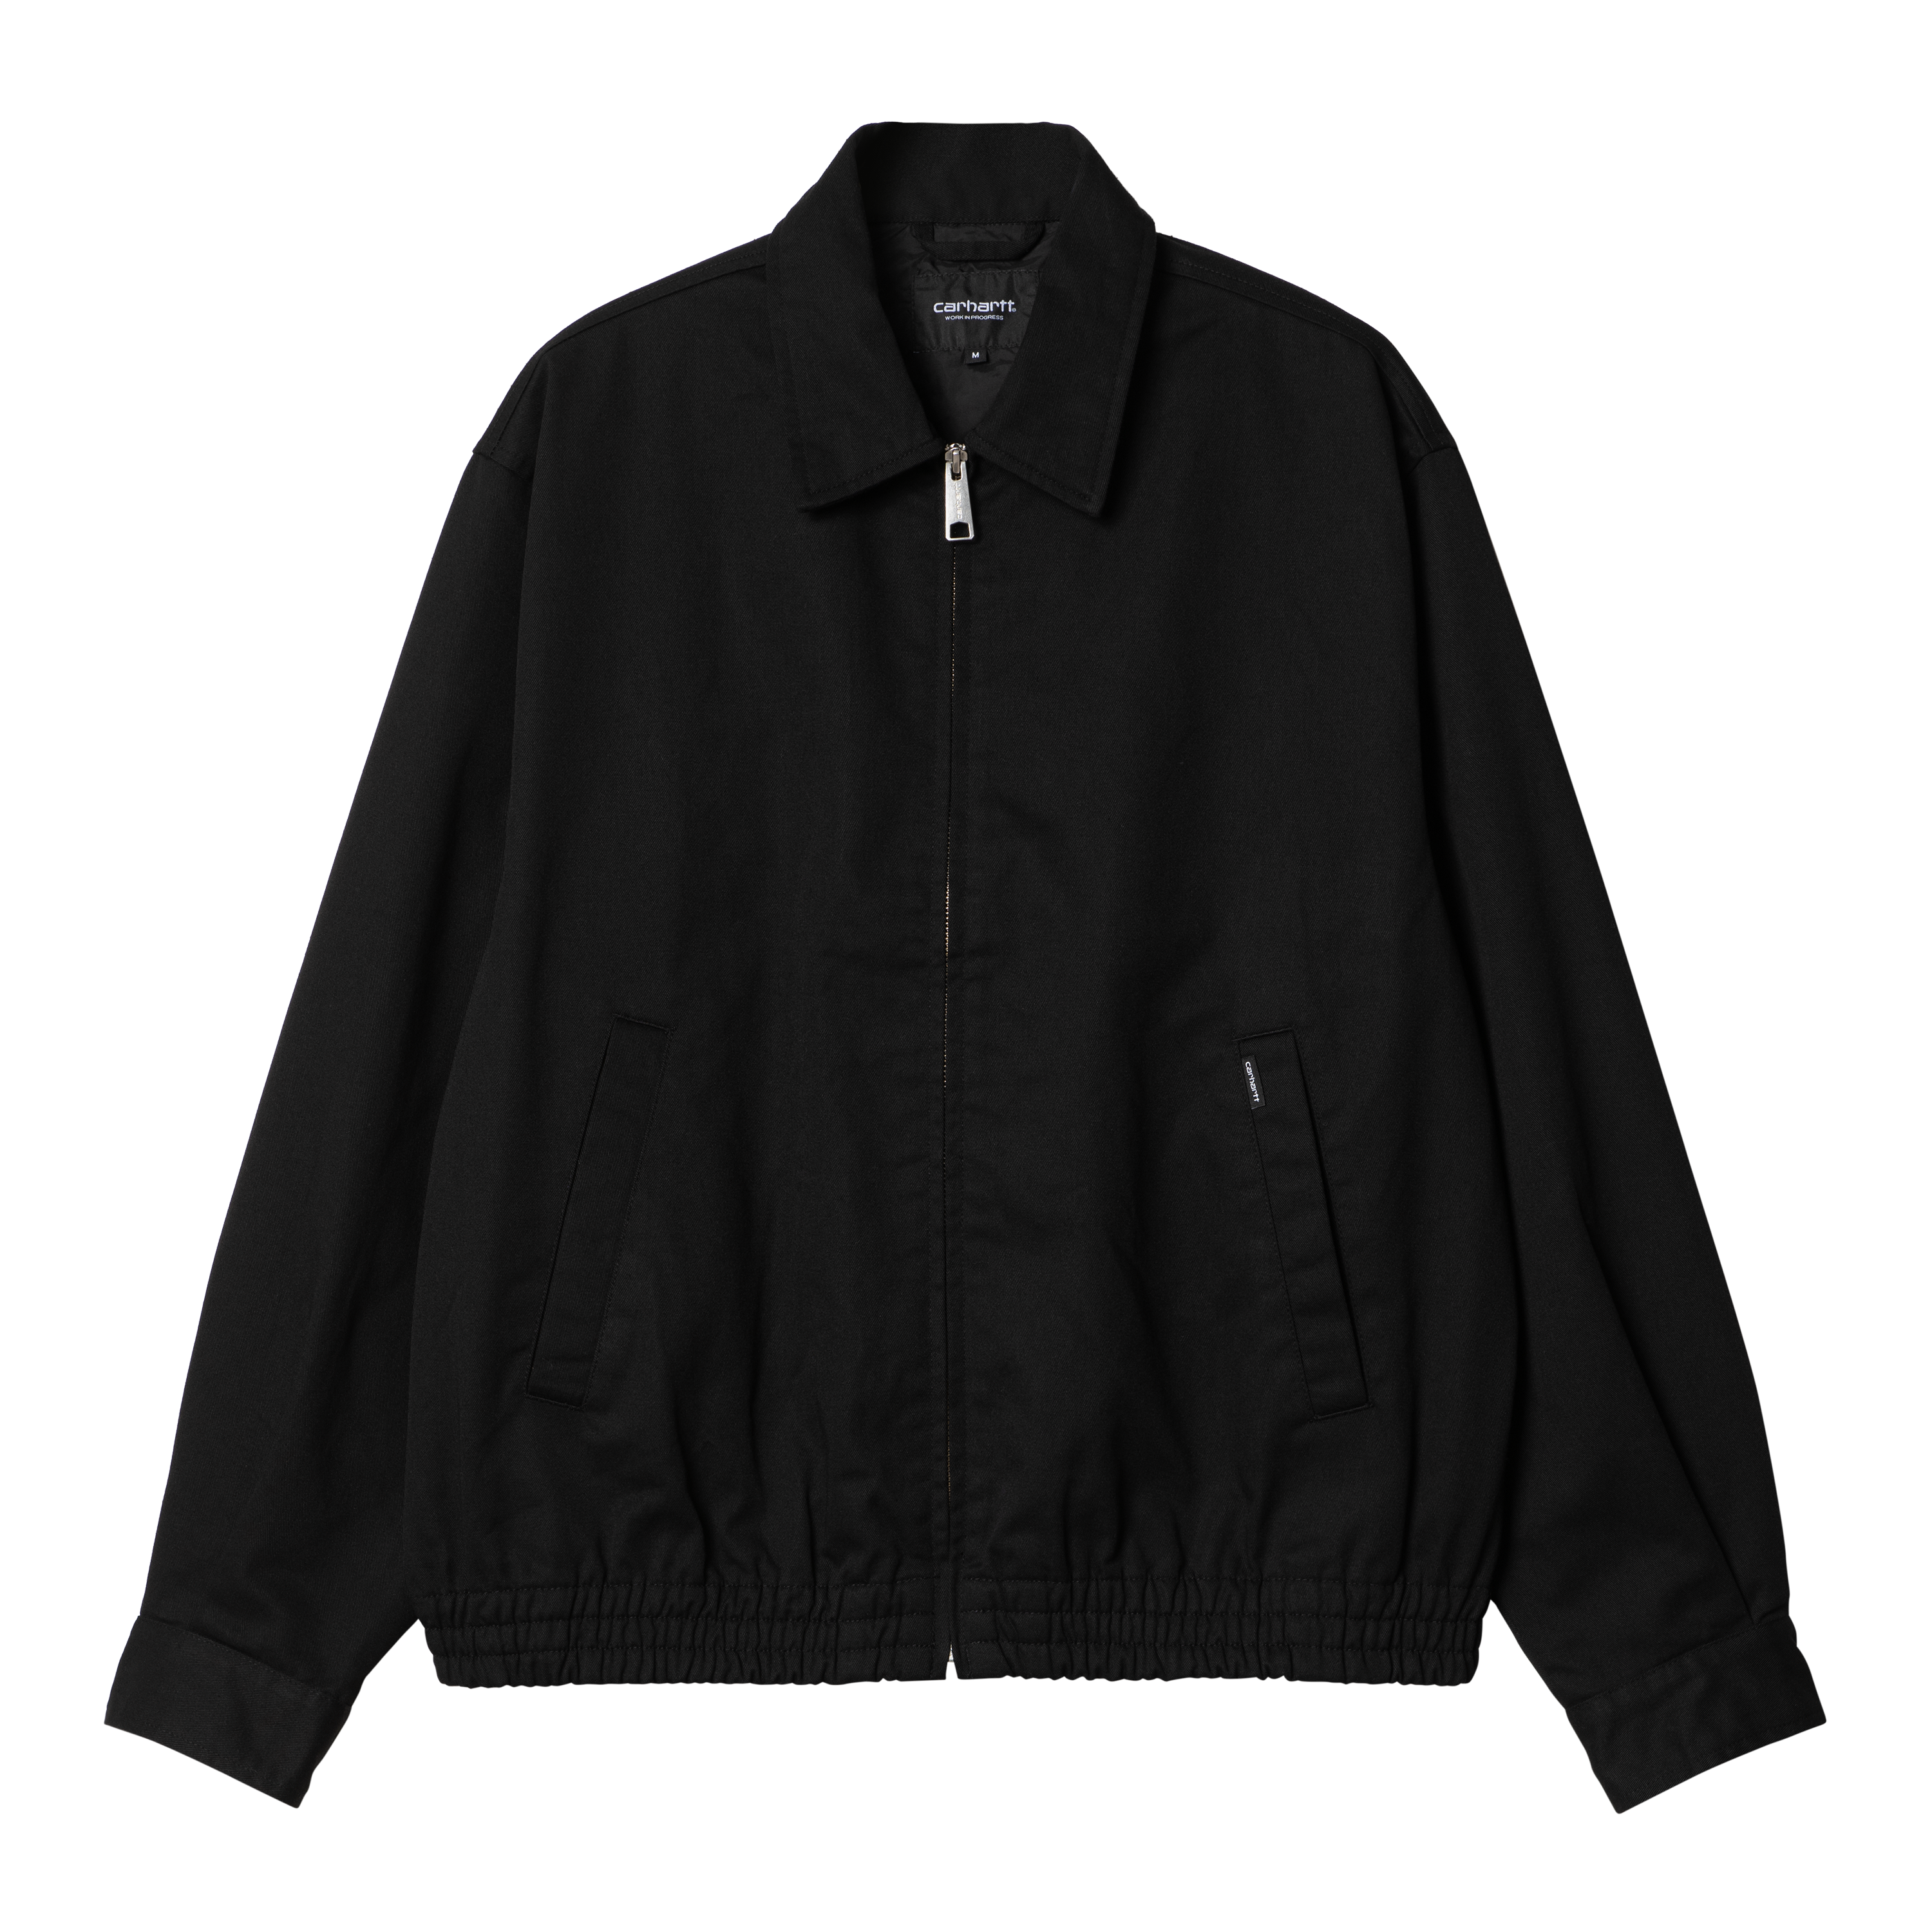 Carhartt WIP Newhaven Jacket in Black